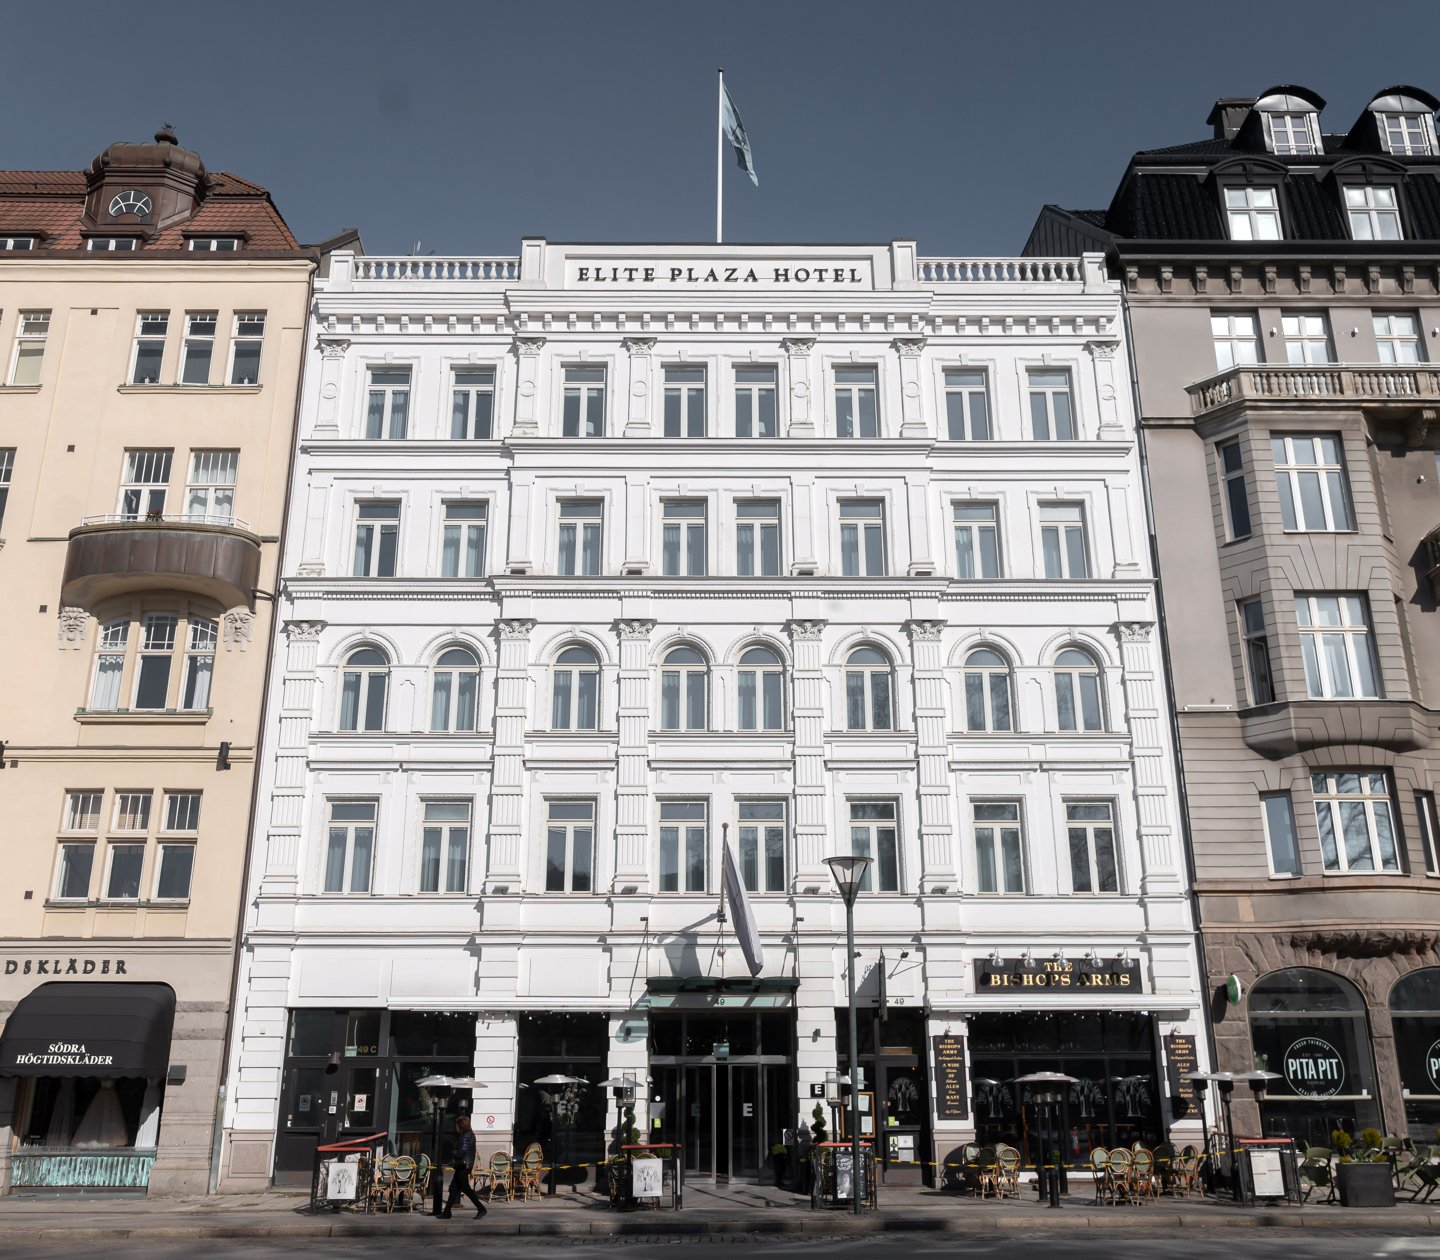 The facade at Elite Plaza Hotel in Malmö